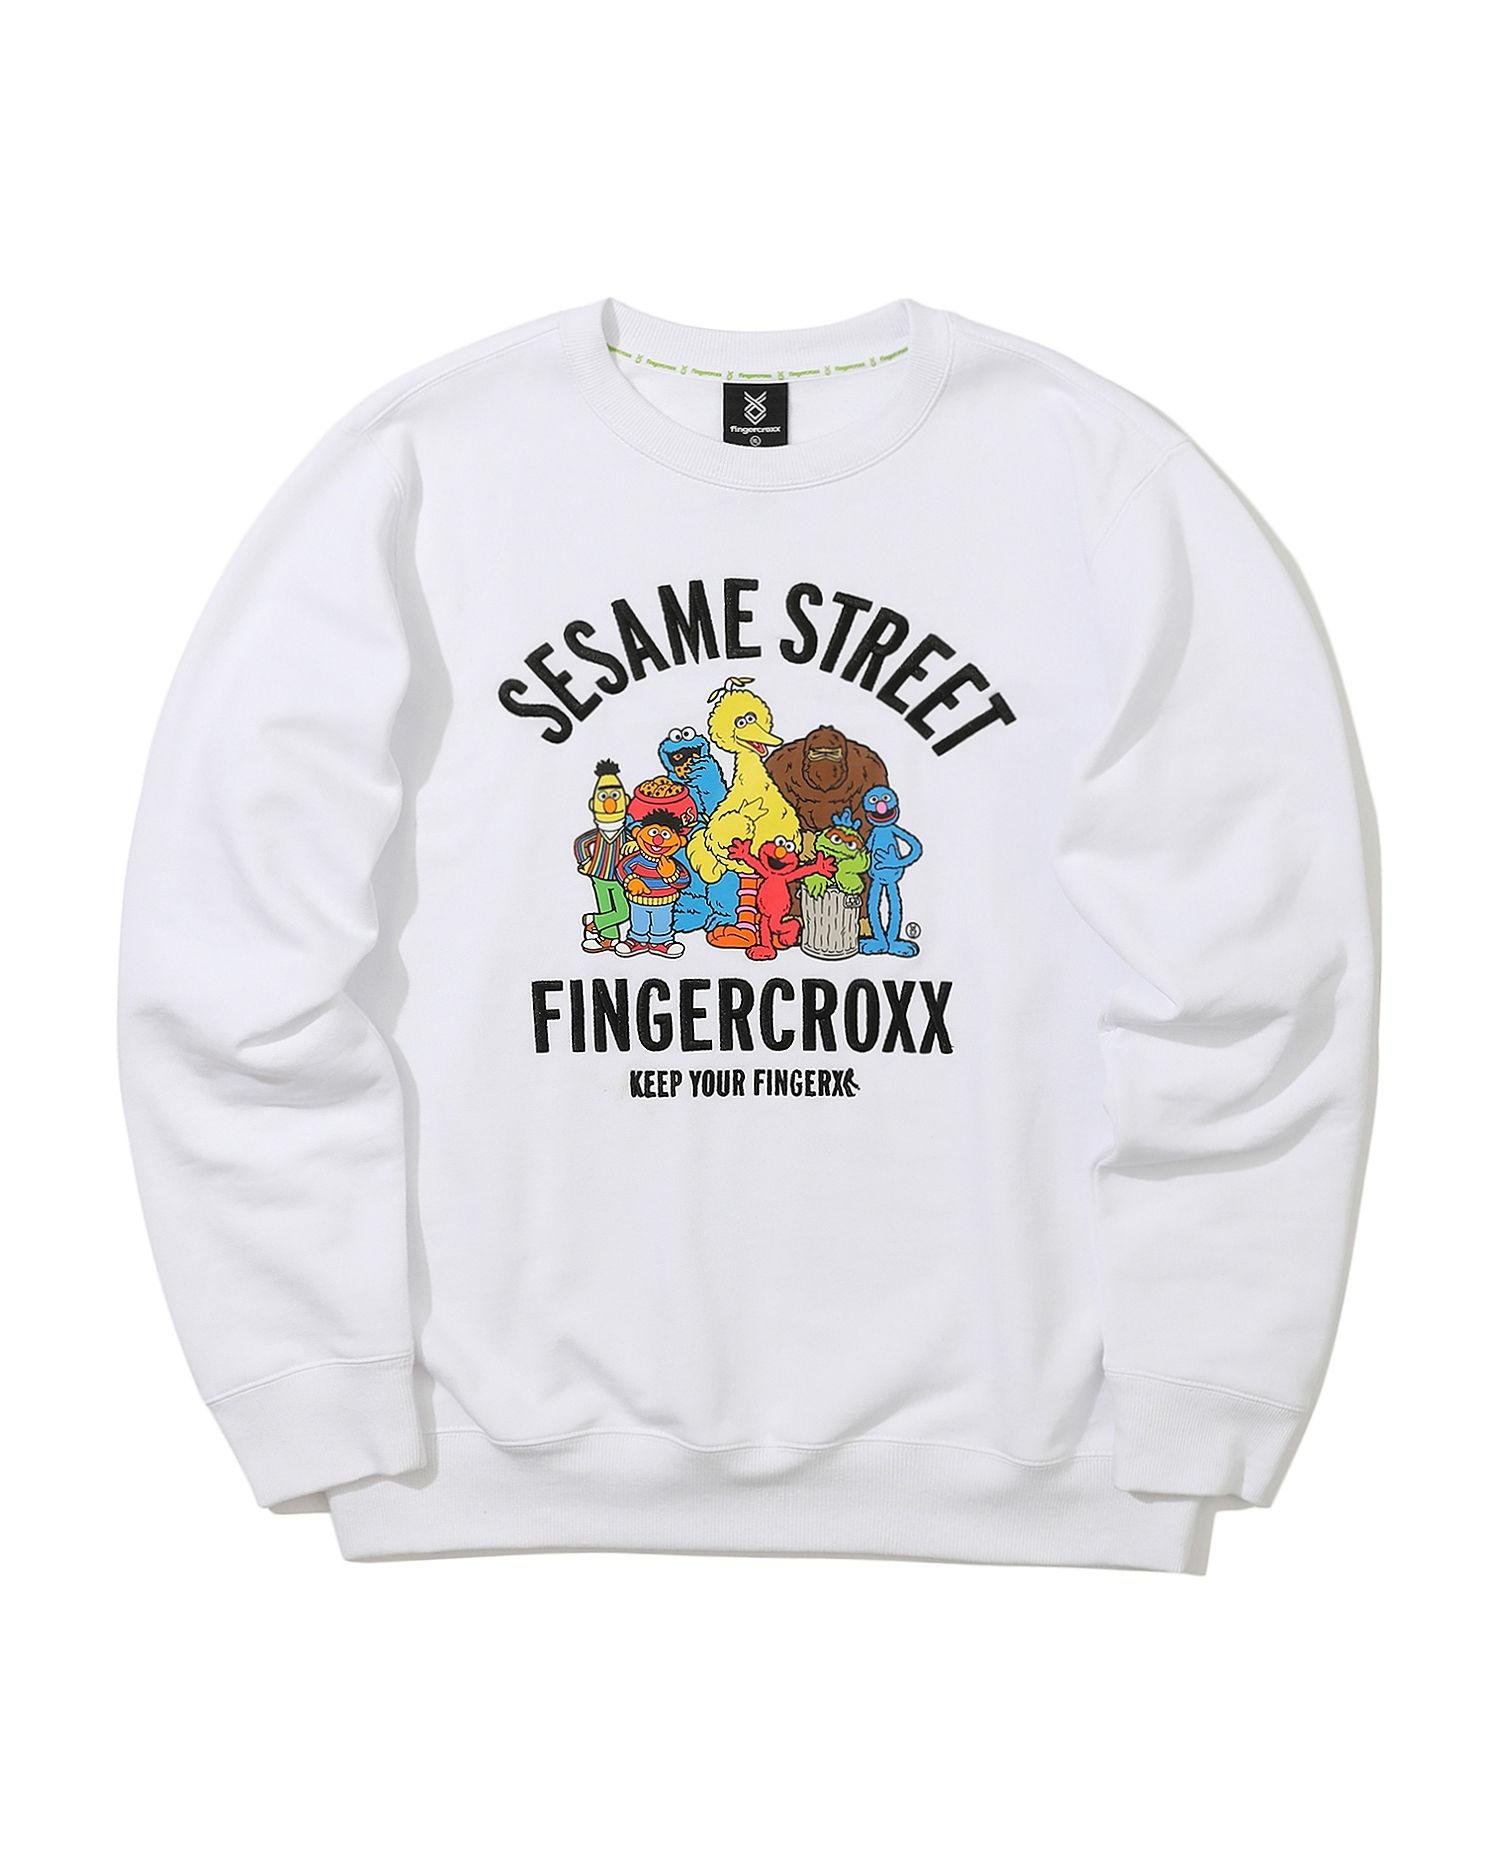 X Sesame Street print sweatshirt by FINGERCROXX